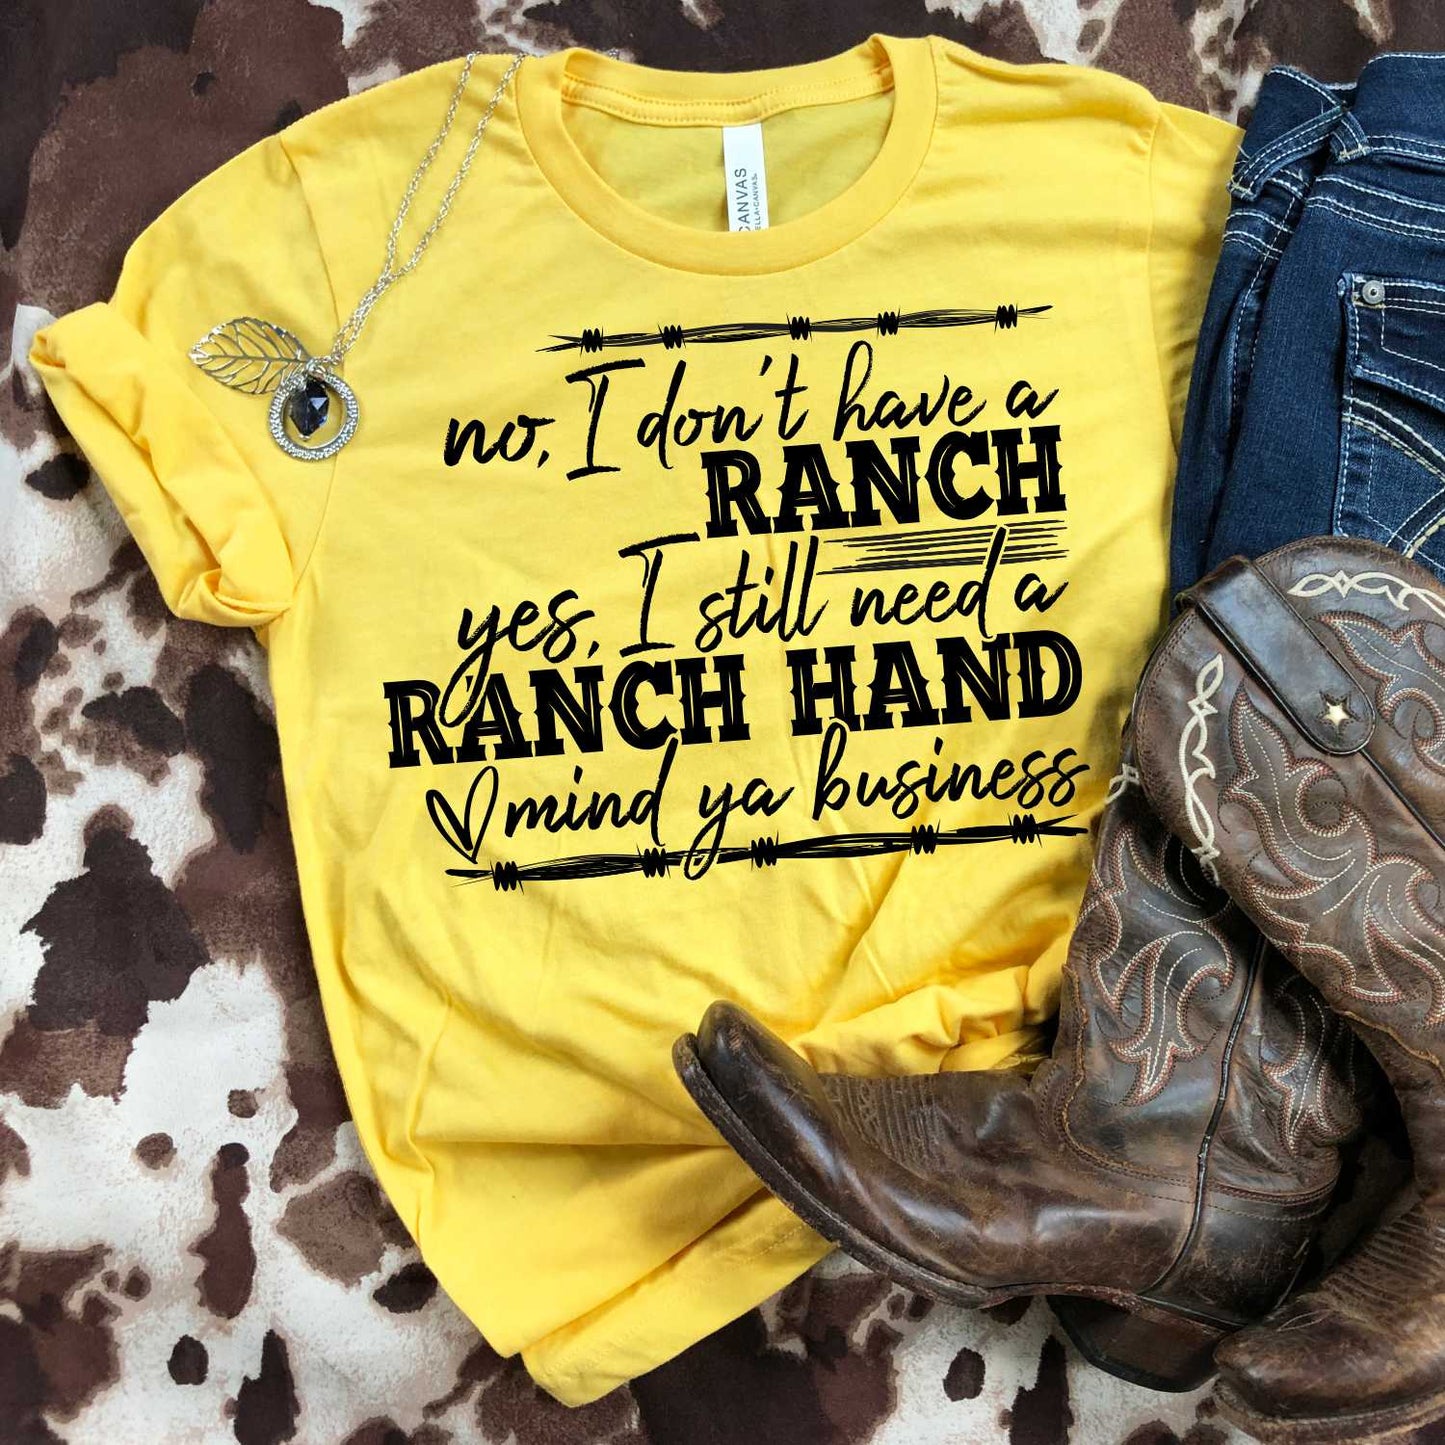 No I don't have a ranch